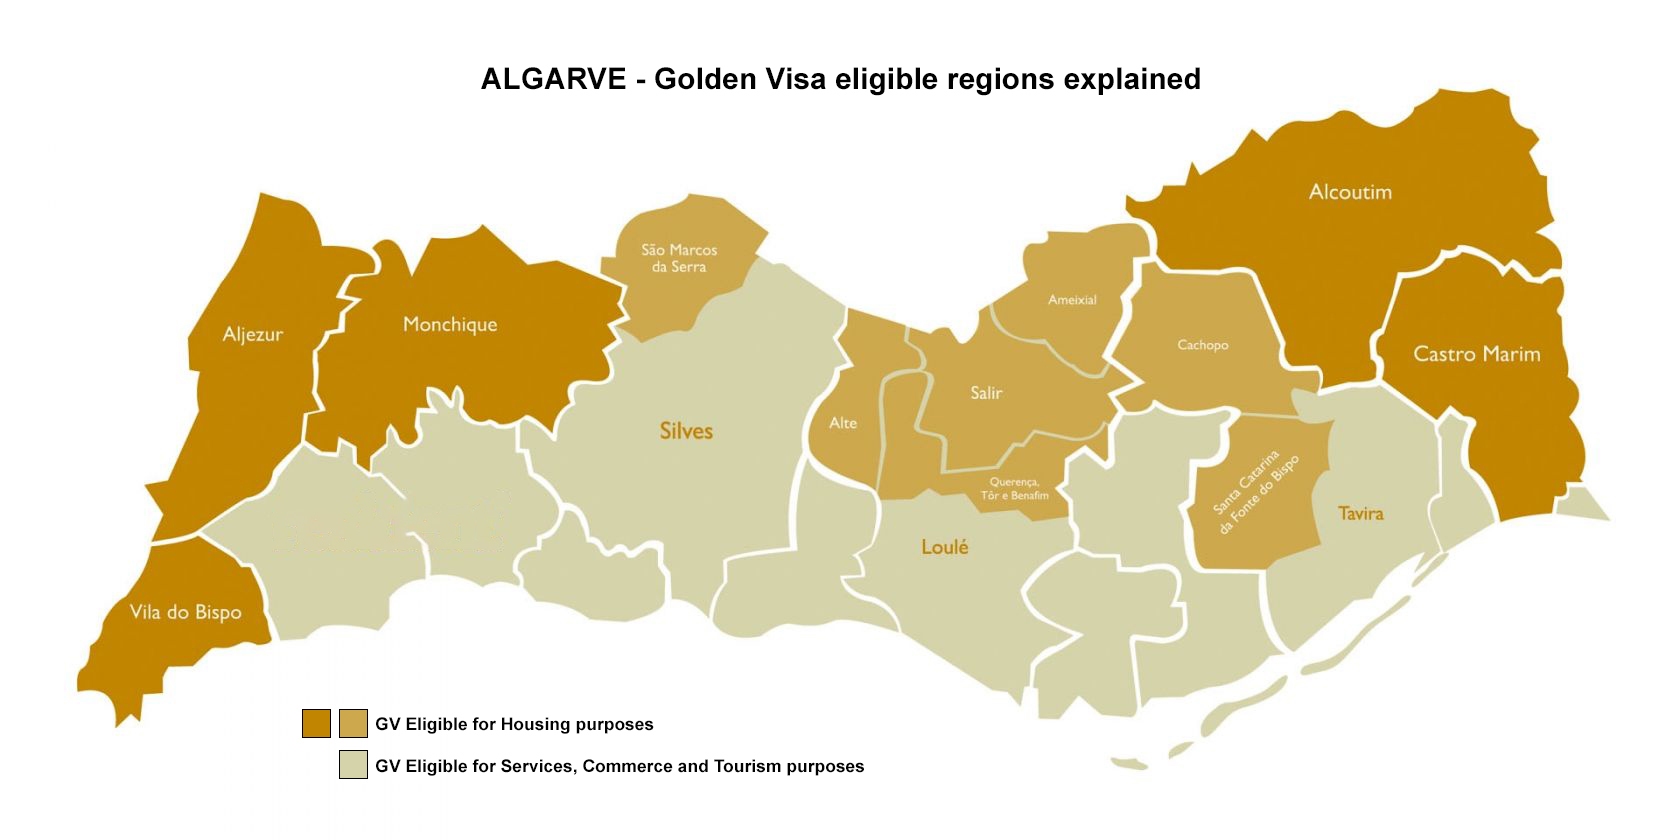 Golden Visa - Algarve regions eligible explained